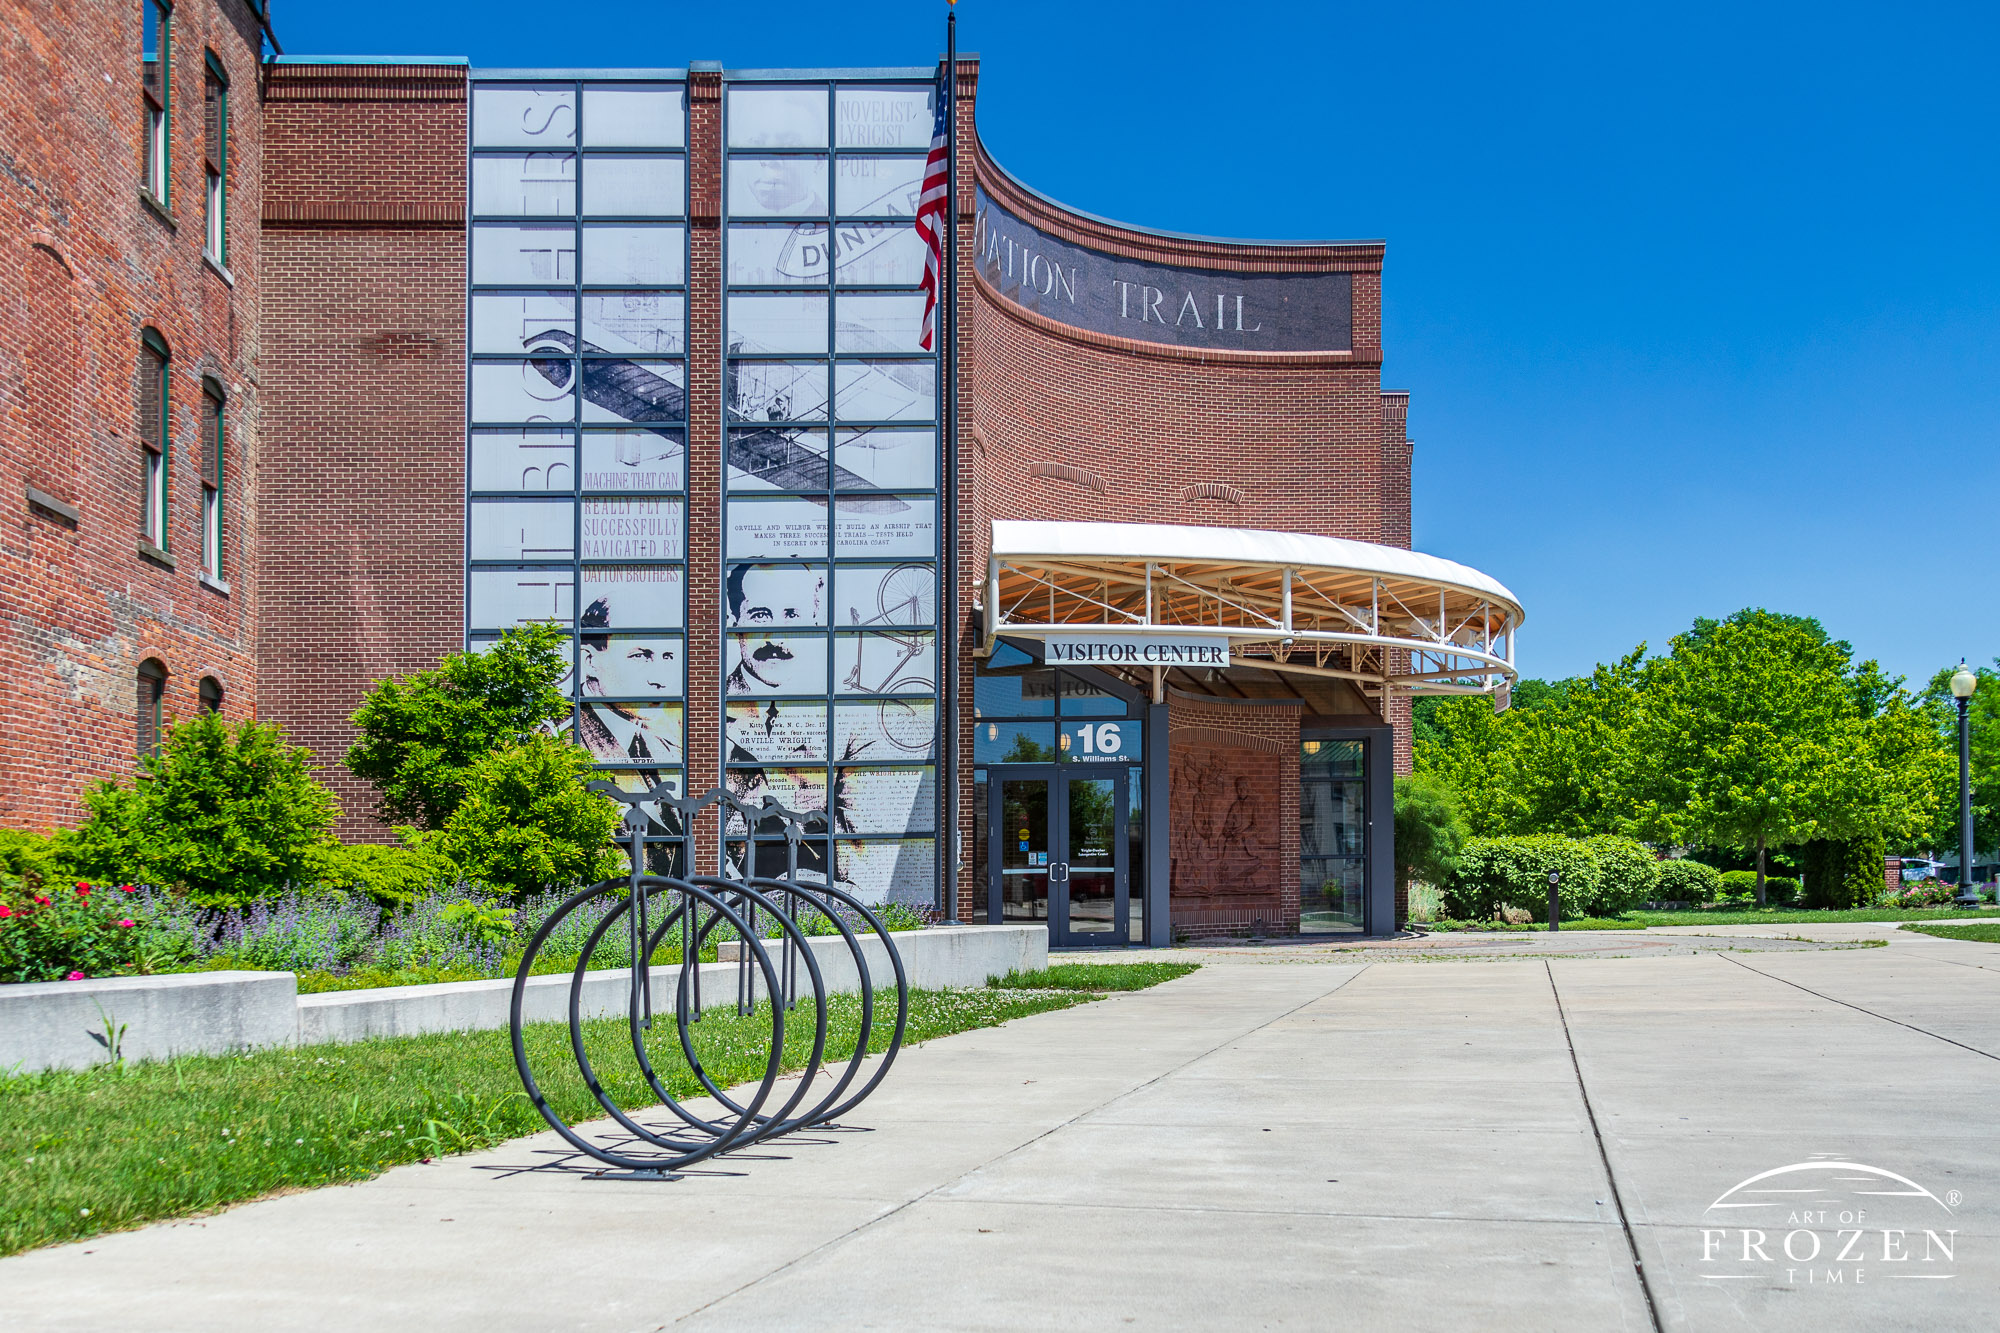 Dayton Aviation Heritage National Historical Park where a wrought iron bike rack resembles turn-of-the-century high-wheeled bikes.